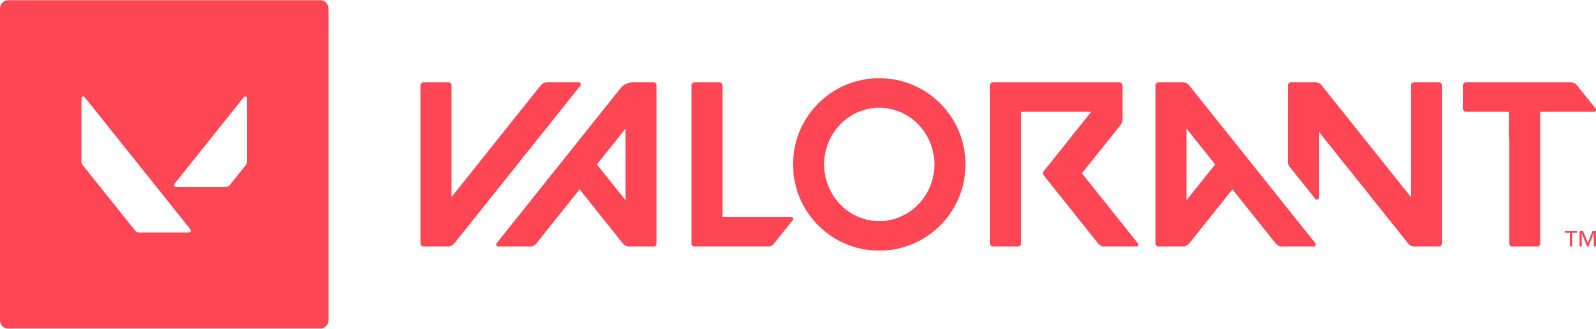 Valorant Logo PNG Image